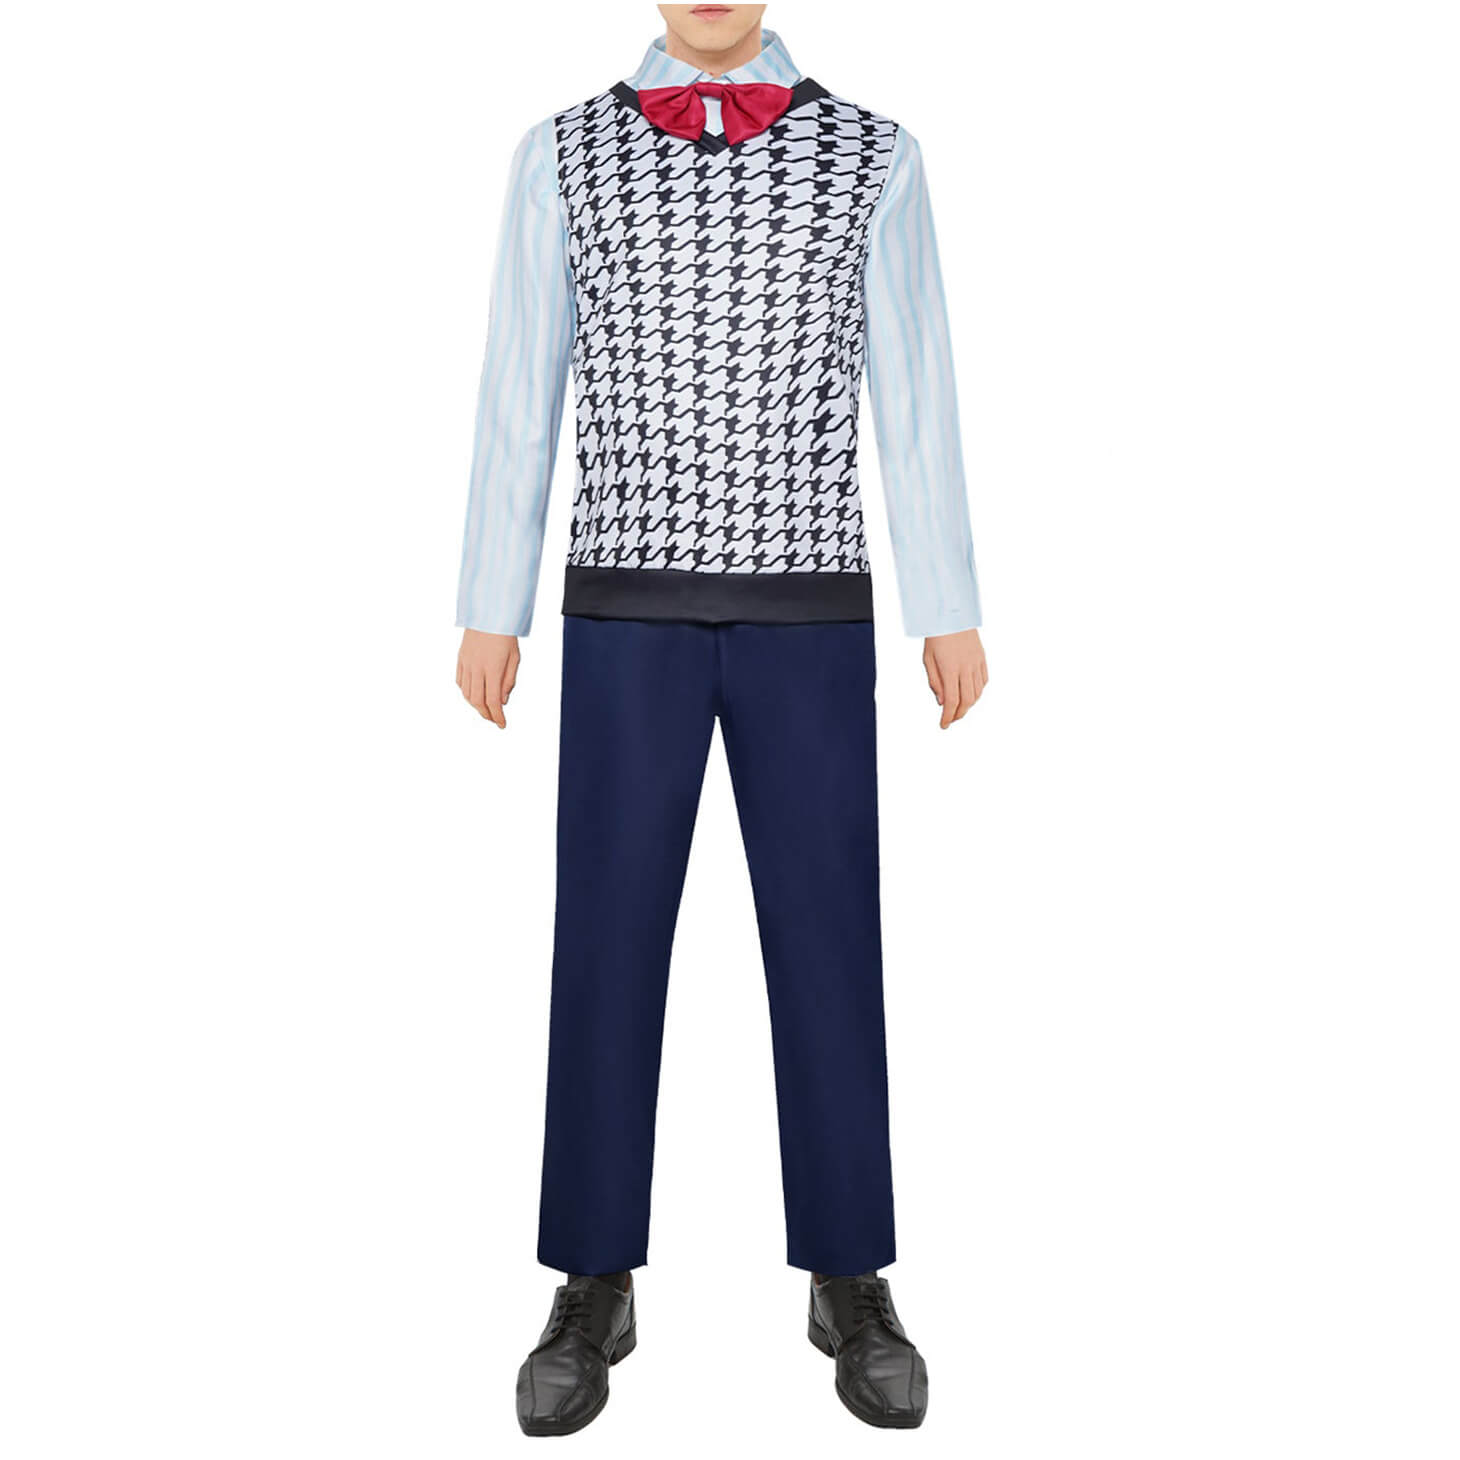 Men's Fear Costume Uniform Suit Striped Shirt Pants Vest and Tie for Halloween Carnival